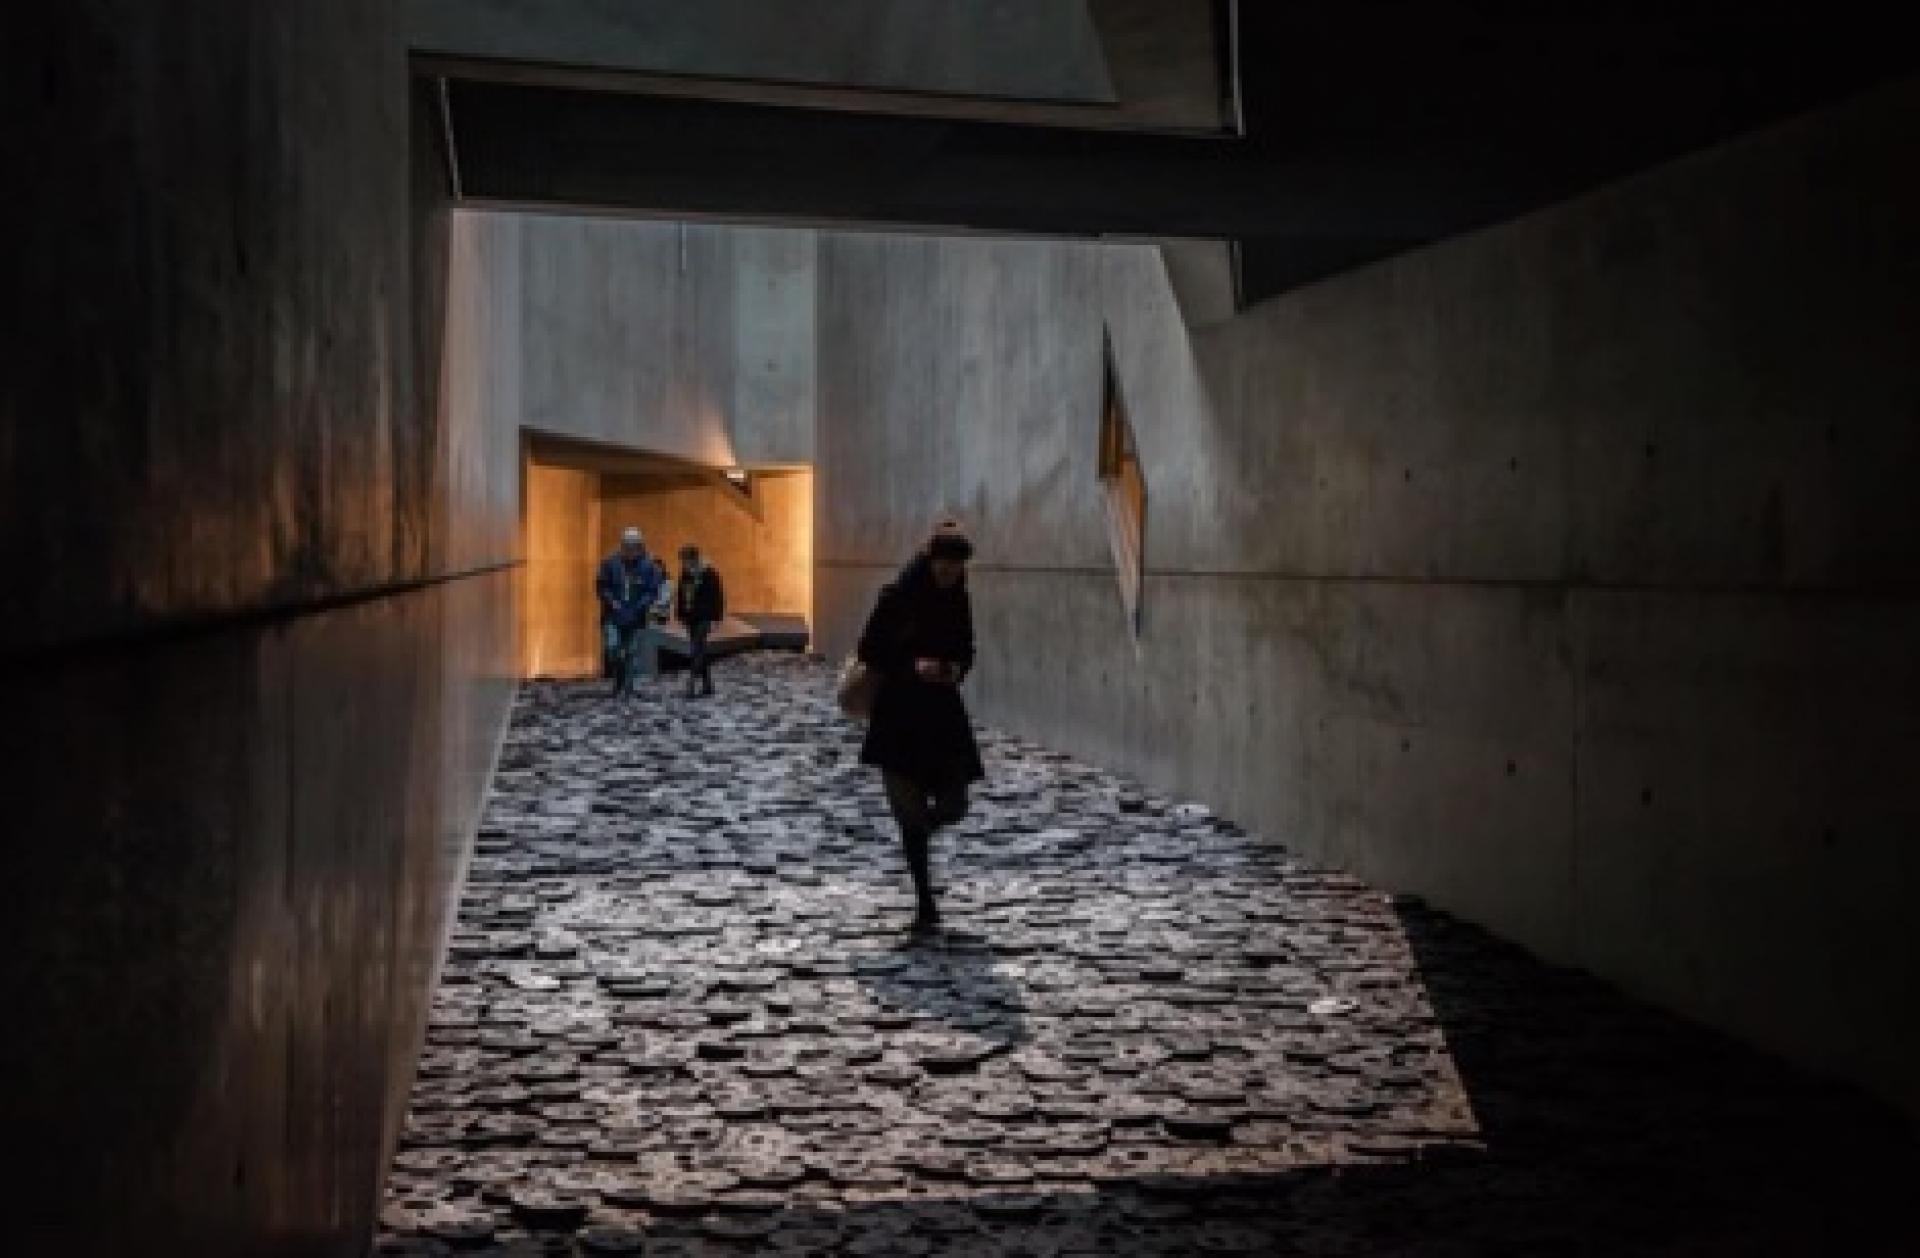 The Jewish Museum by Daniel Libeskind, Berlin (1989-2001).